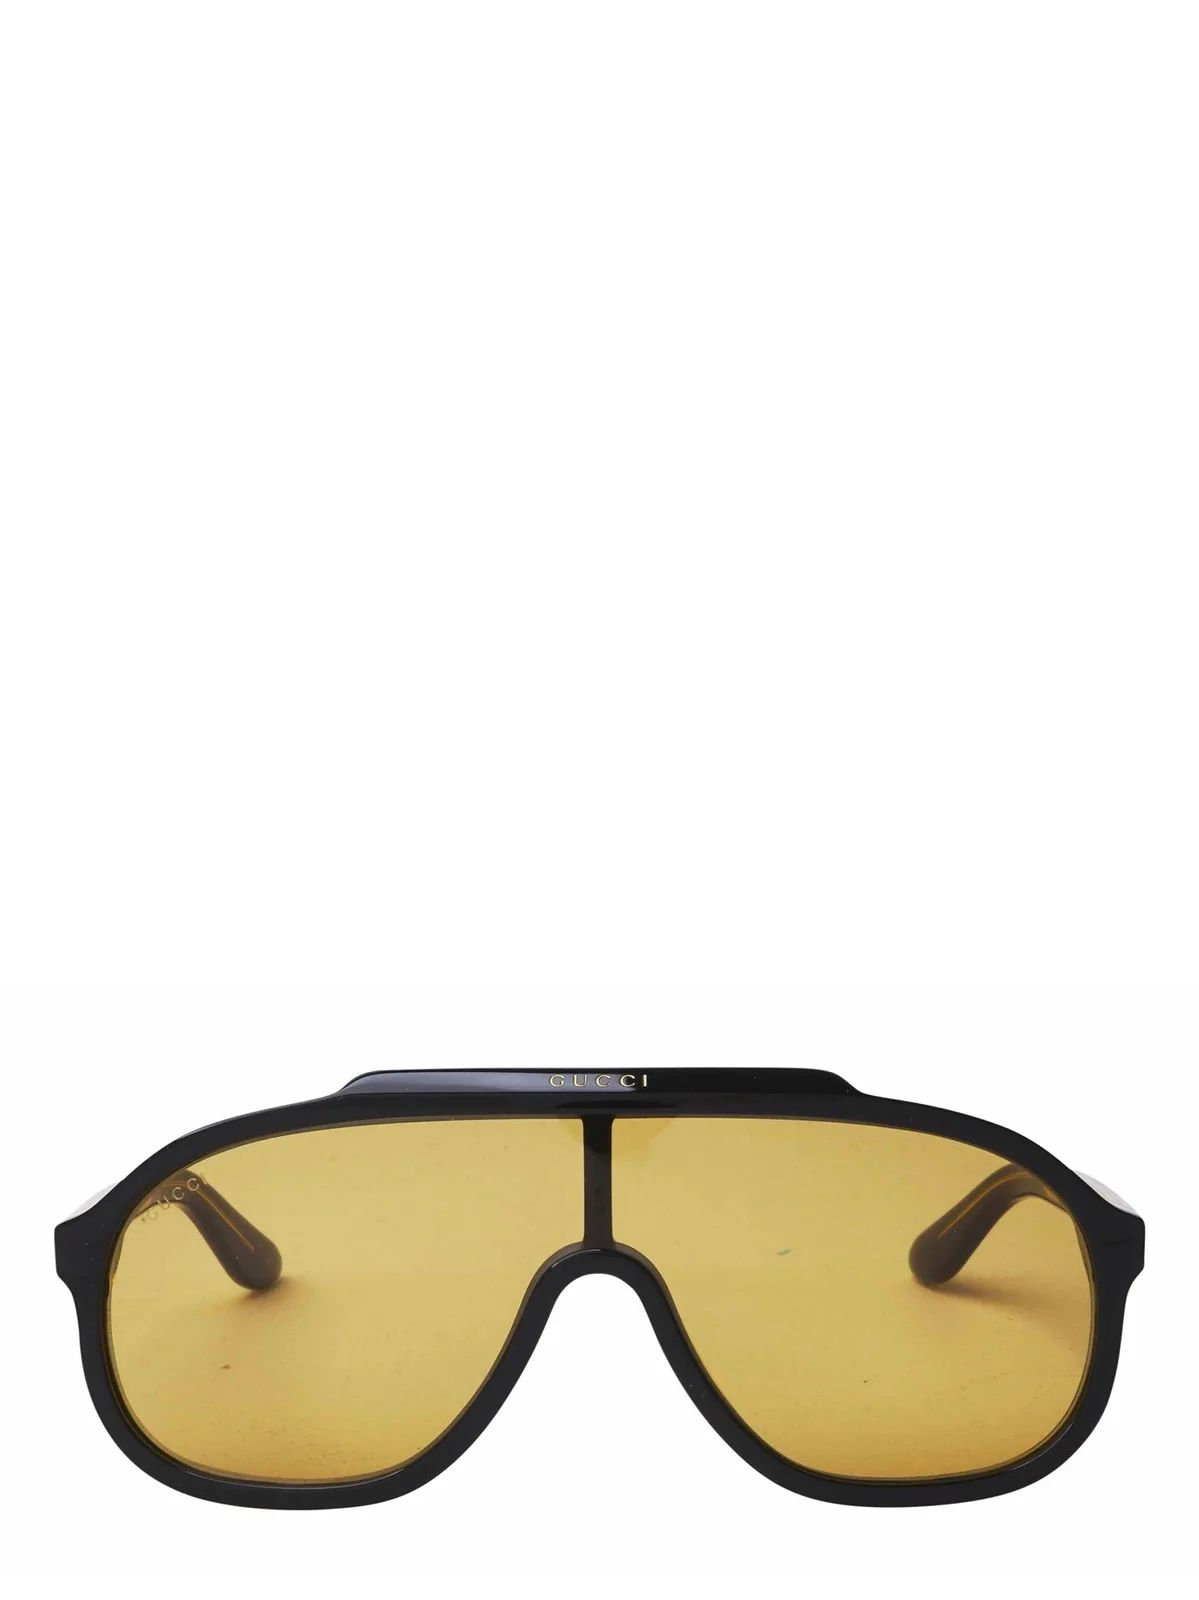 Gucci Eyewear Oversized Aviator Sunglasses | Cettire Global